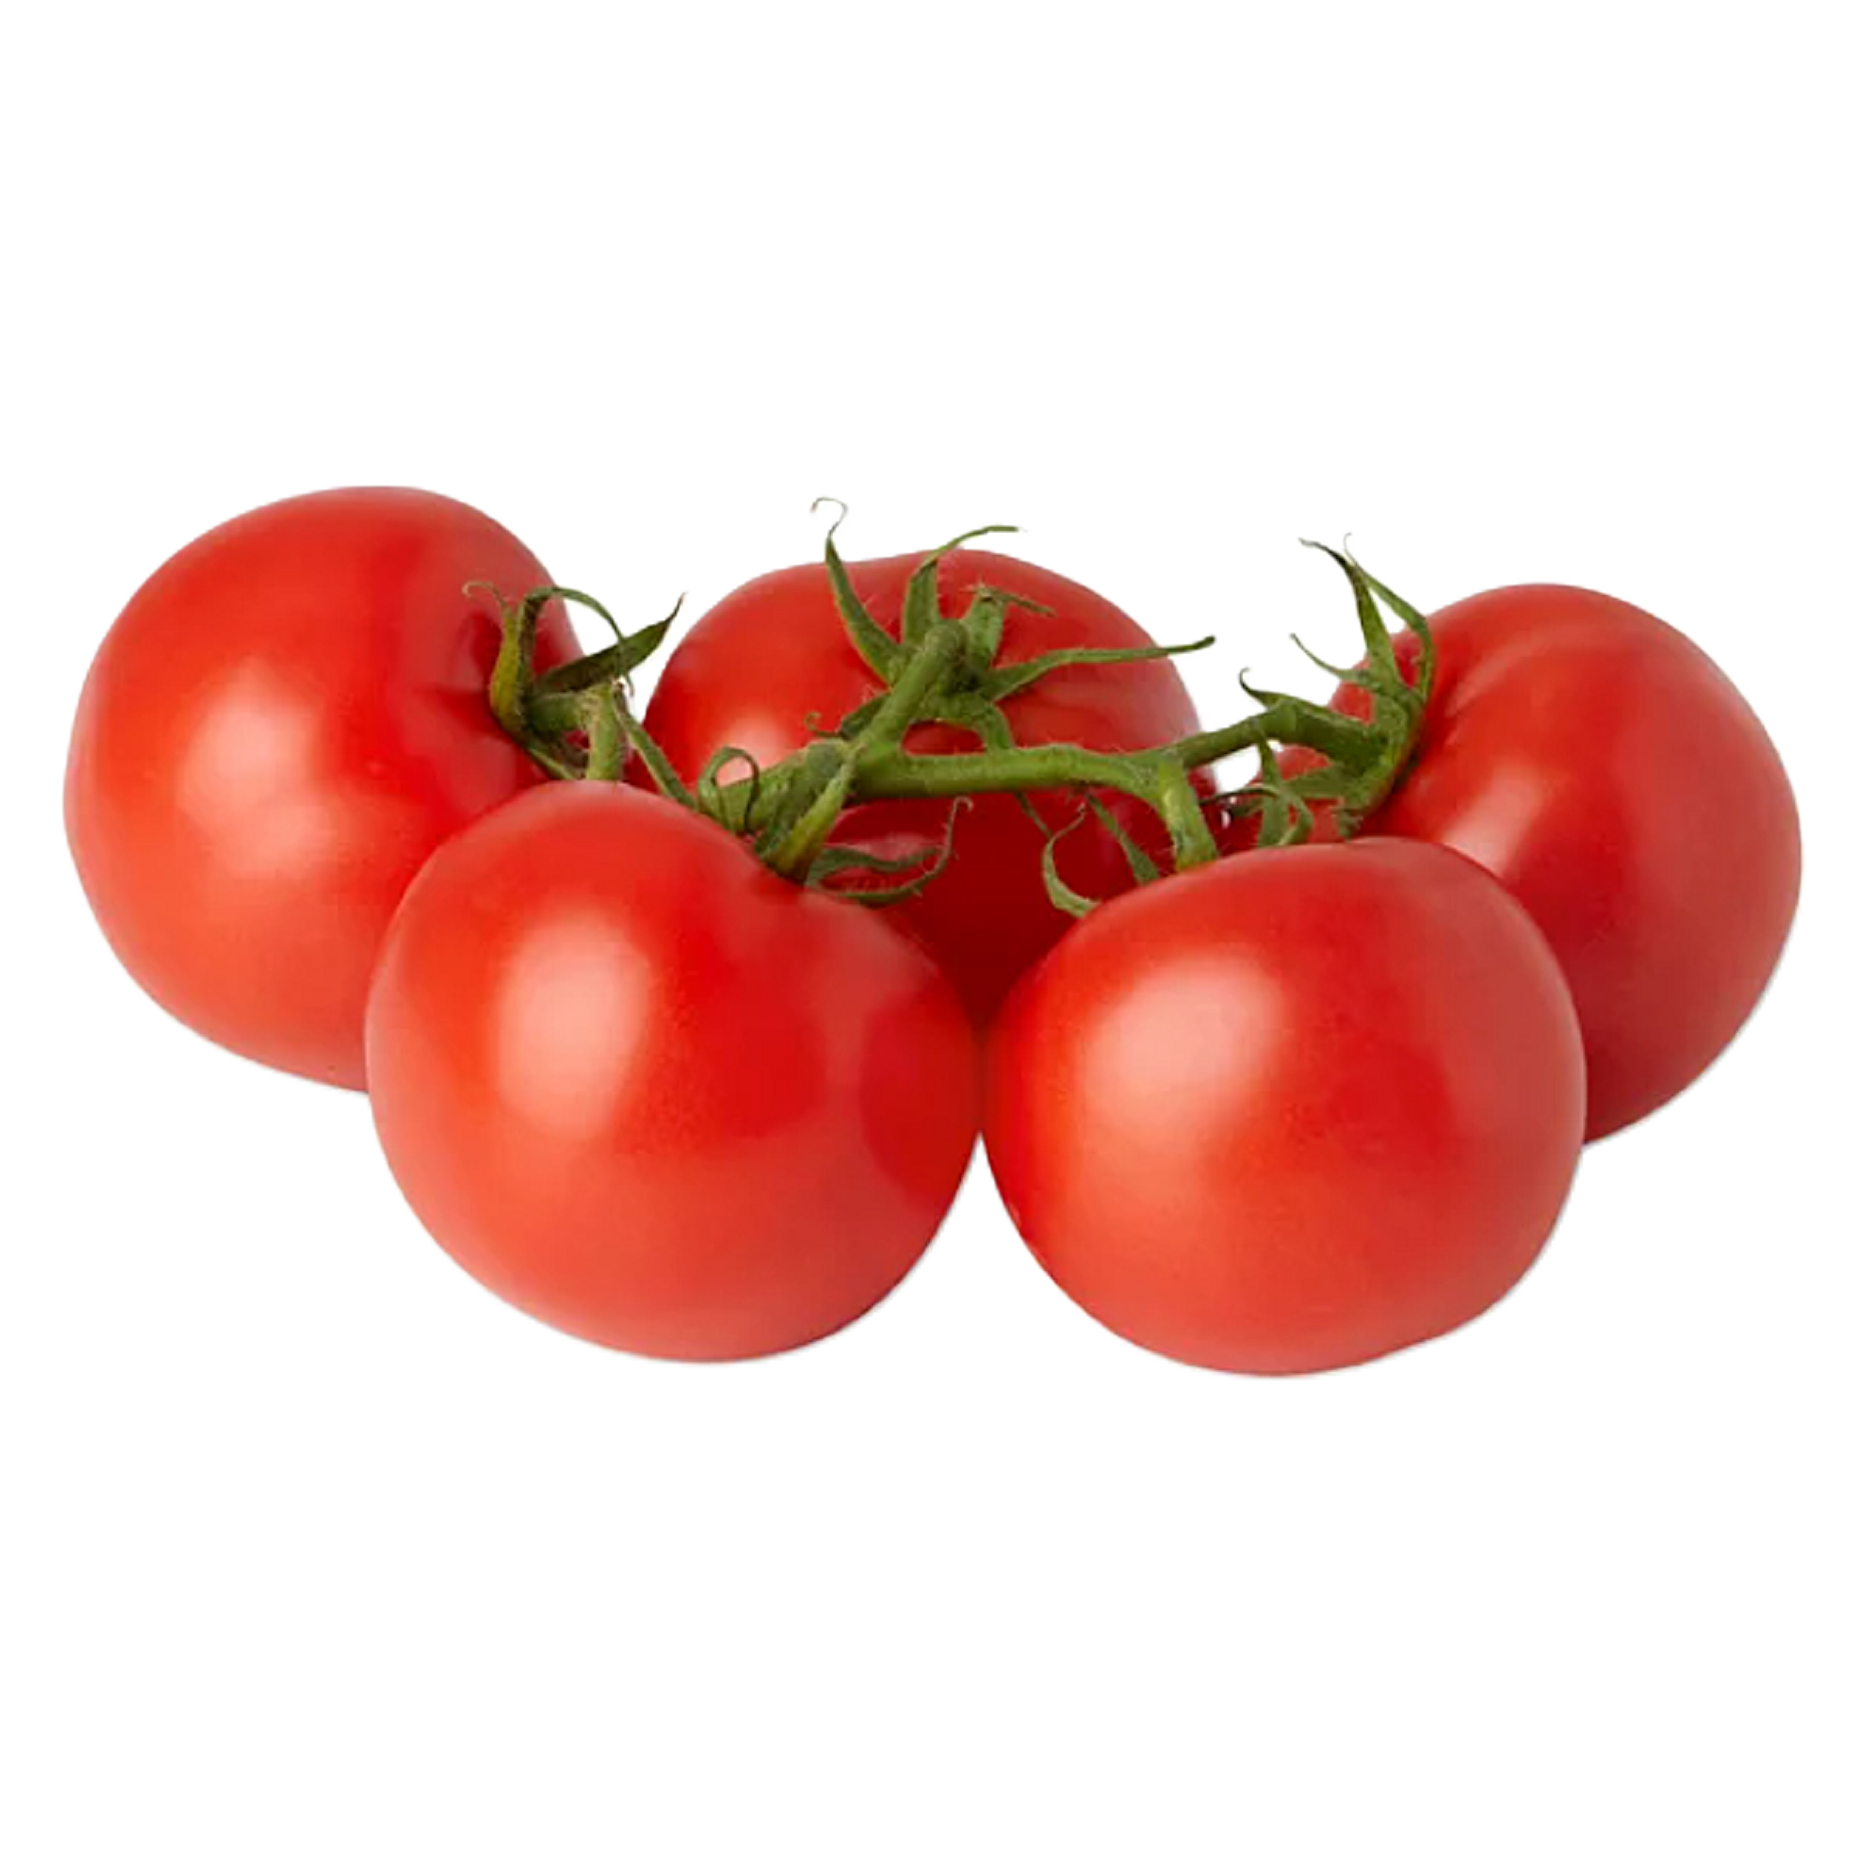 Organic Tomatoes on the Vine - 1lb